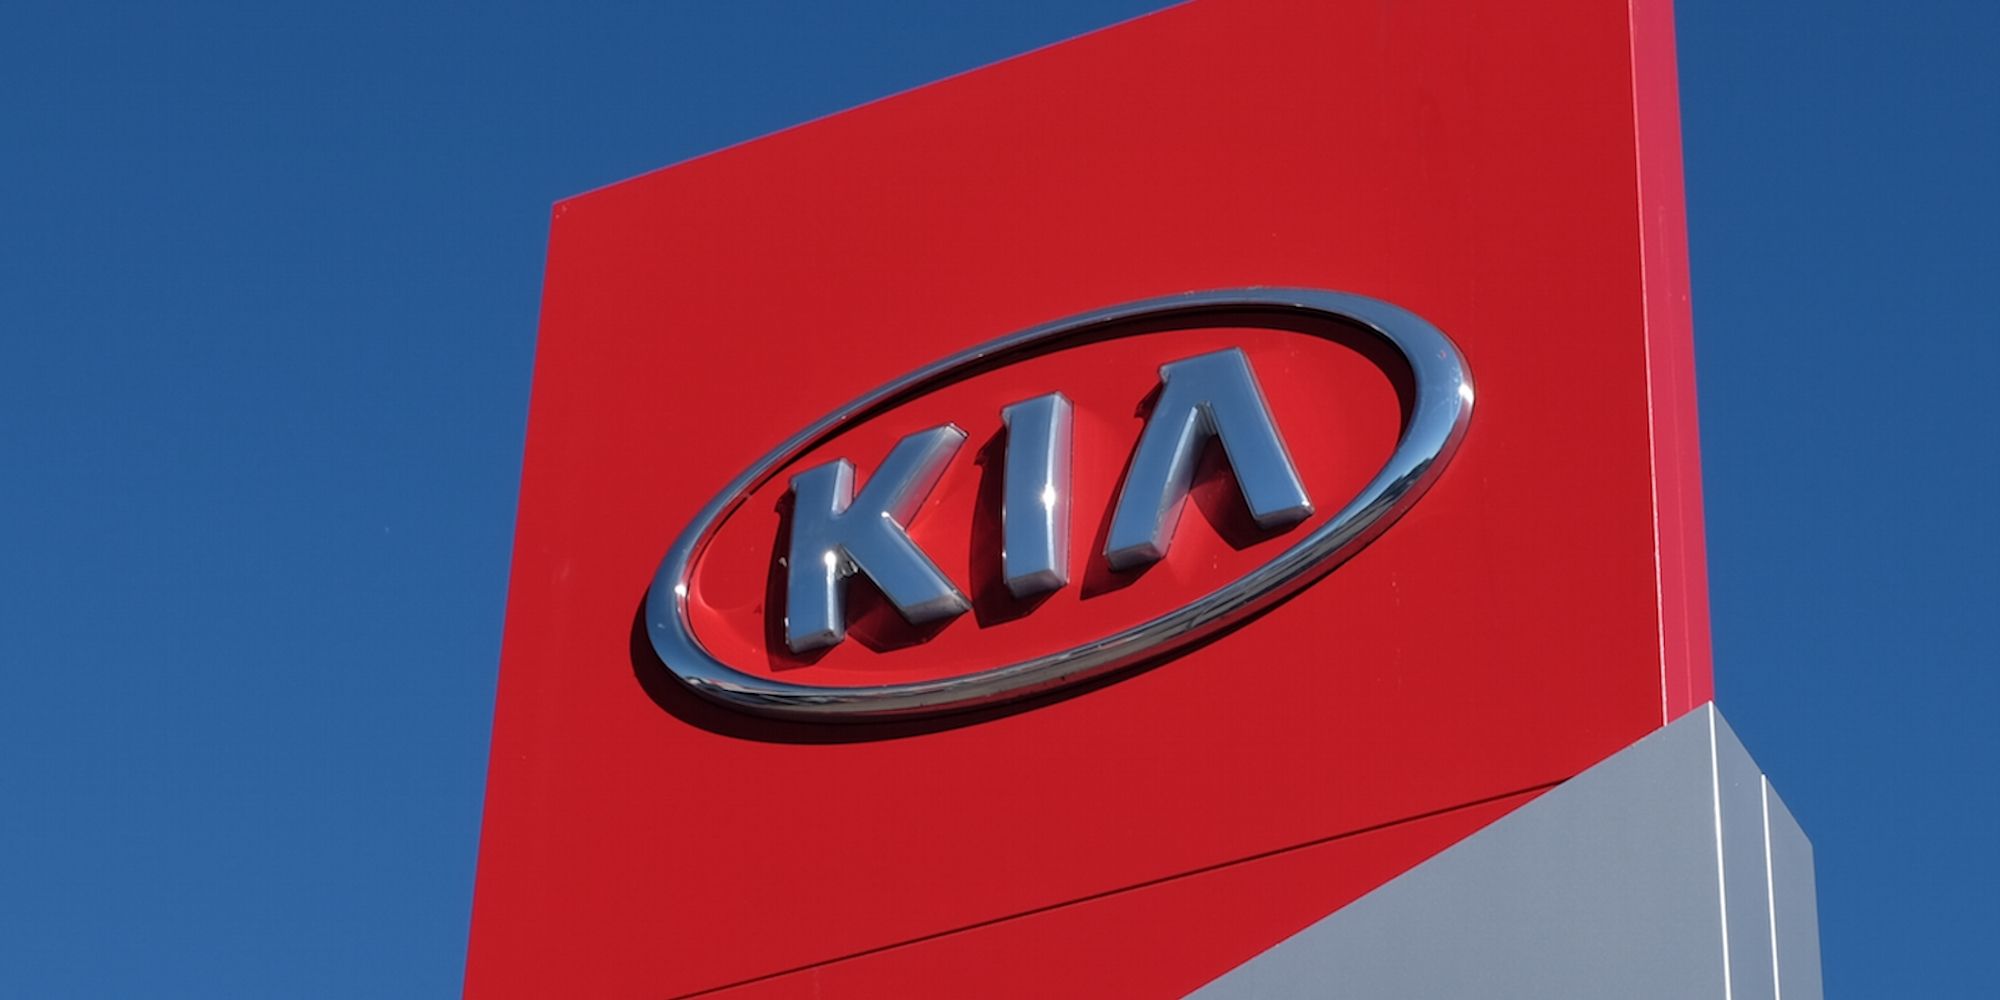 Kia logo dealership